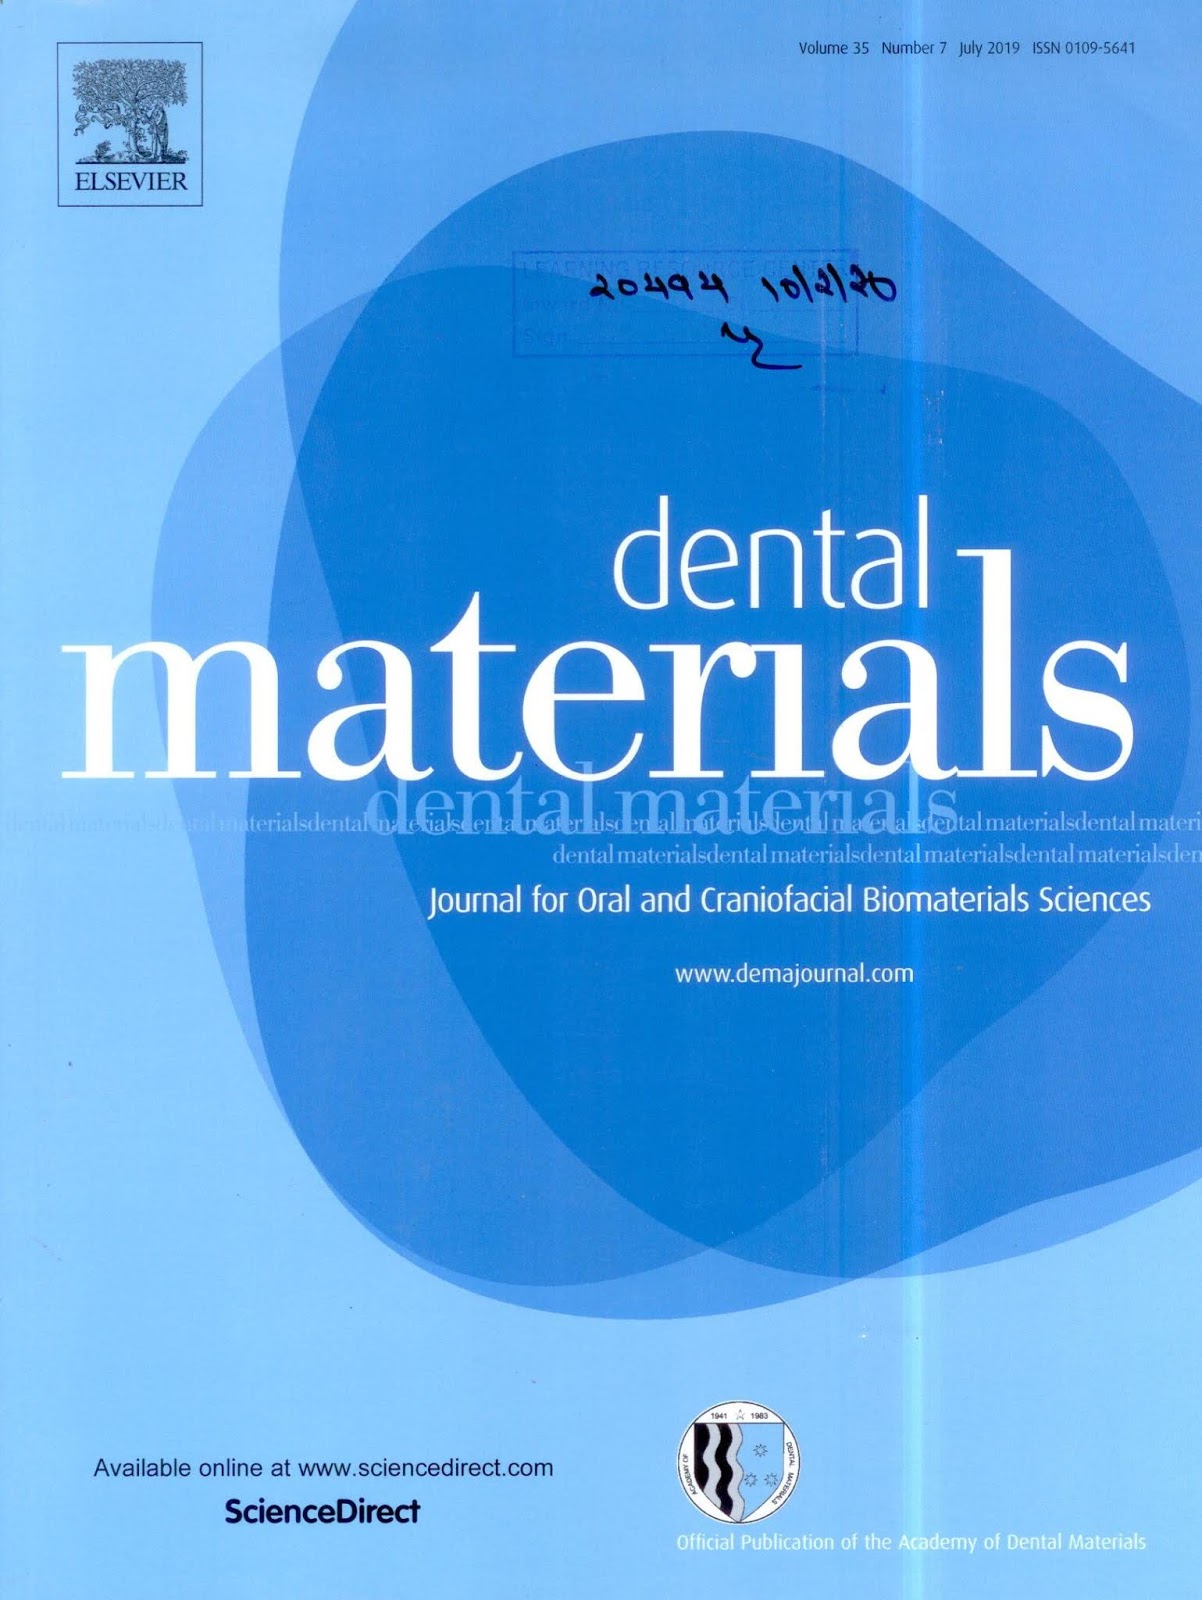 https://www.sciencedirect.com/journal/dental-materials/vol/35/issue/7